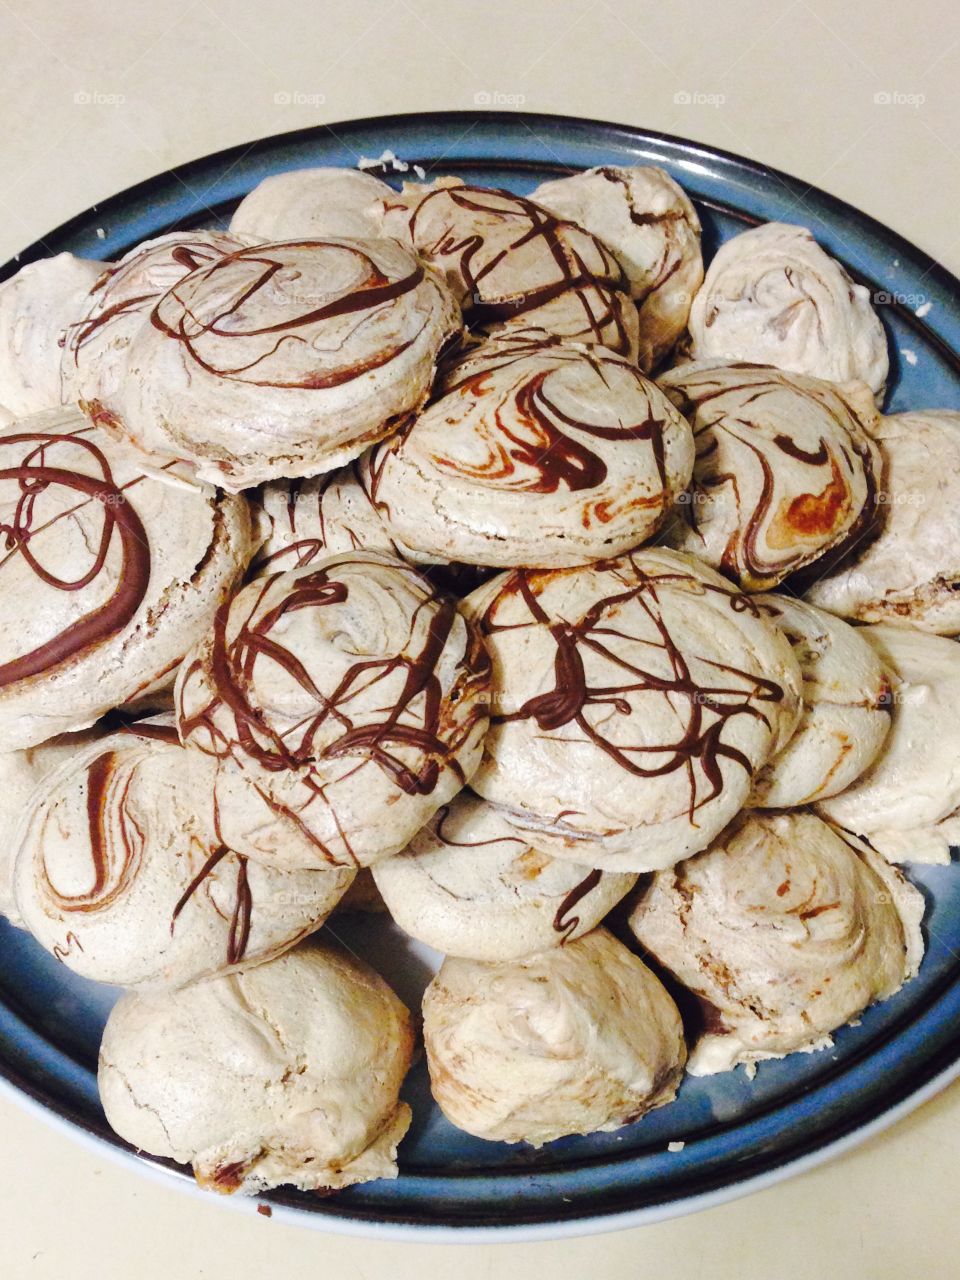 Chocolate swirl meringues